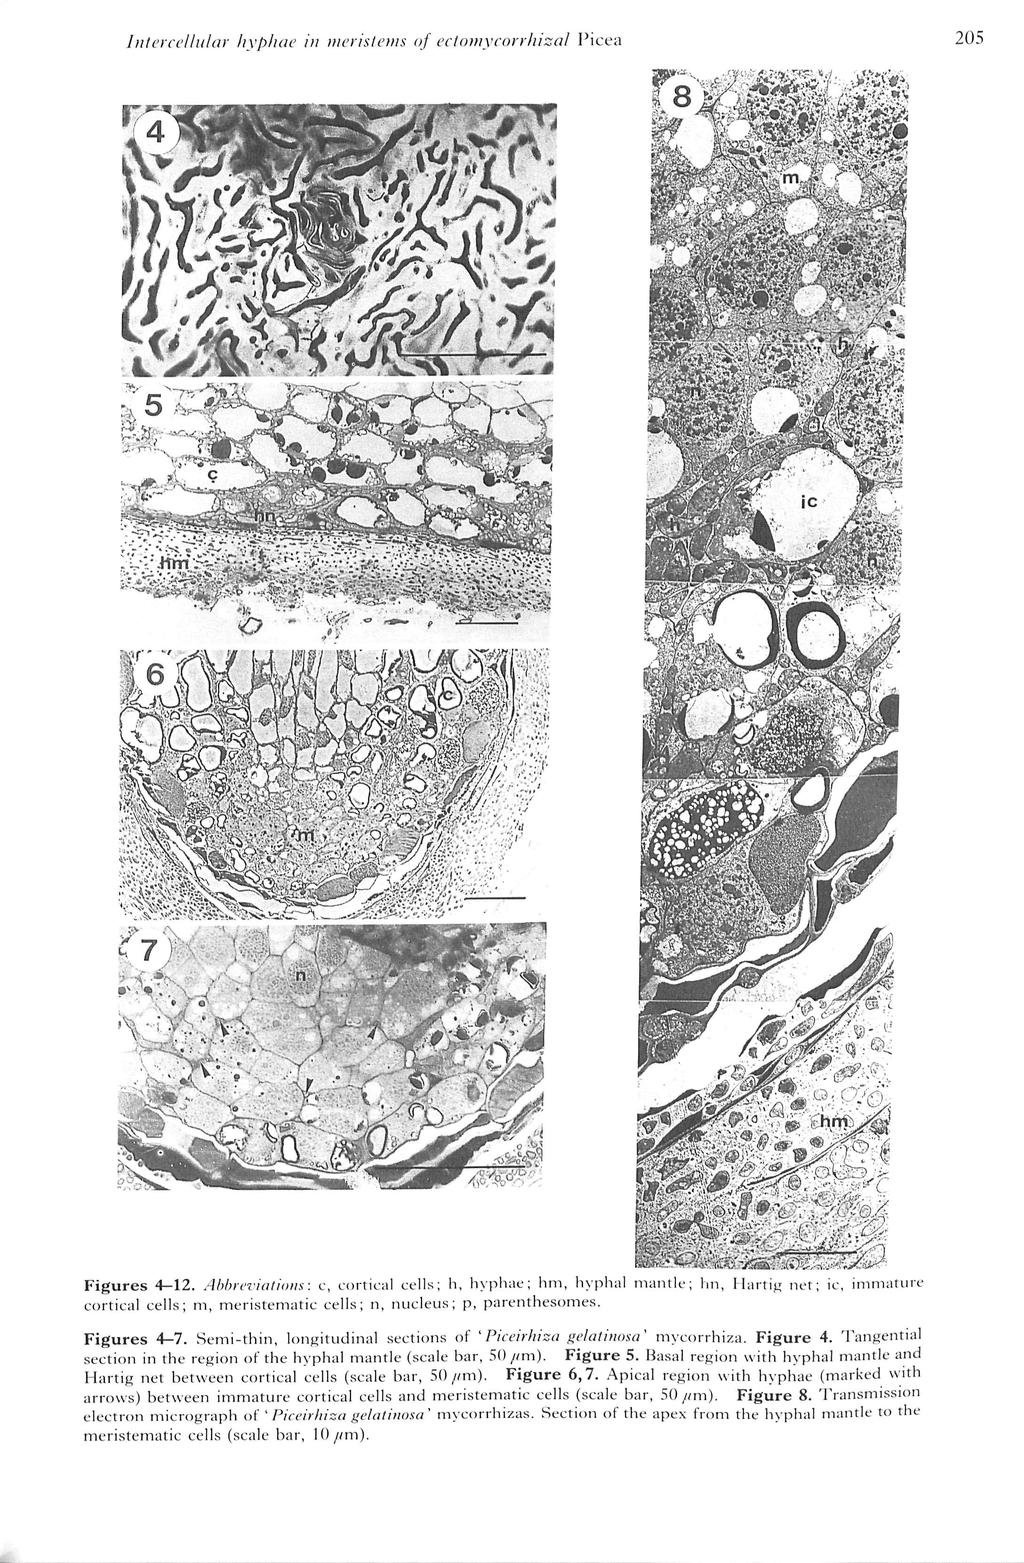 205 Ittteicellttlar hypltae i/i luerislents of eetomycorrhizal Picea ic " Figures 4-12. Abbicviatiotts: c, c()rtic;il cells; h, hypliae; hm, Inphal in.mtk cortical cell.